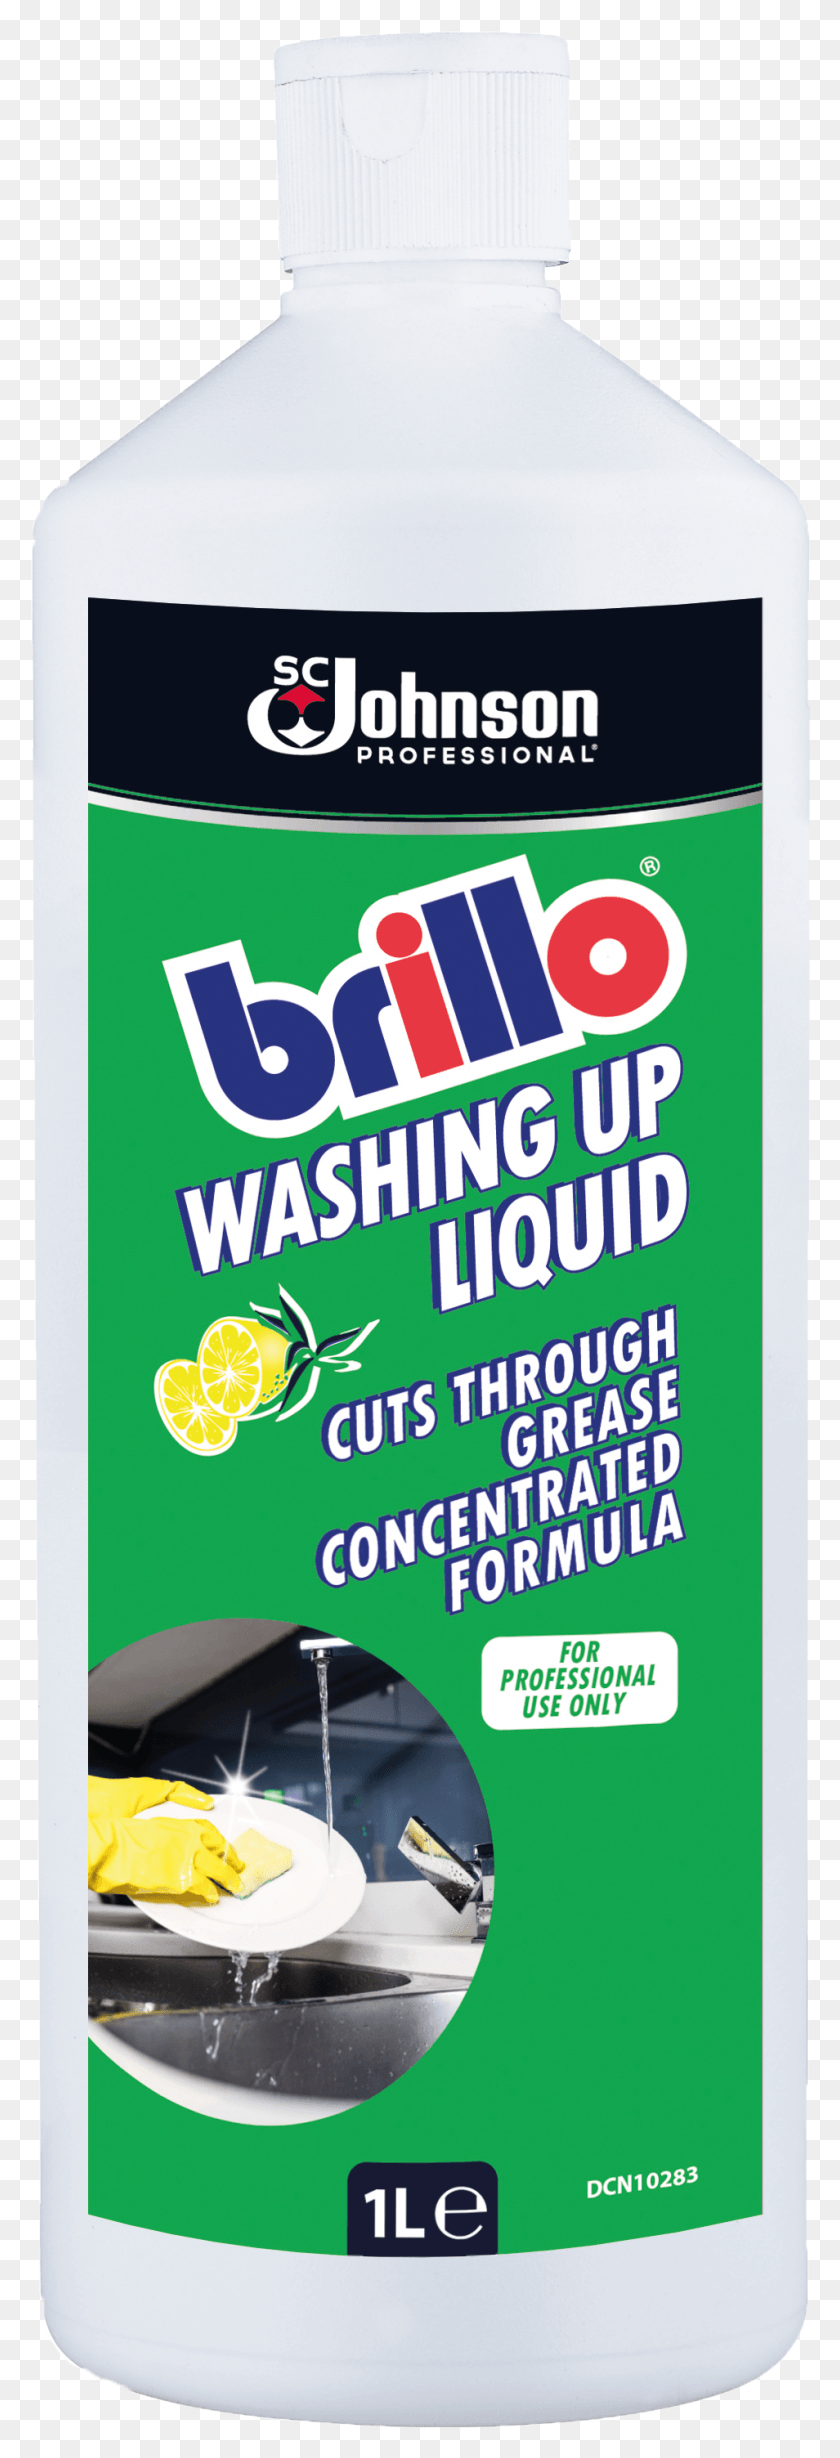 954x2933 Жидкость Для Мытья Посуды Brillo Nutraceutical, Реклама, Плакат, Флаер Hd Png Скачать